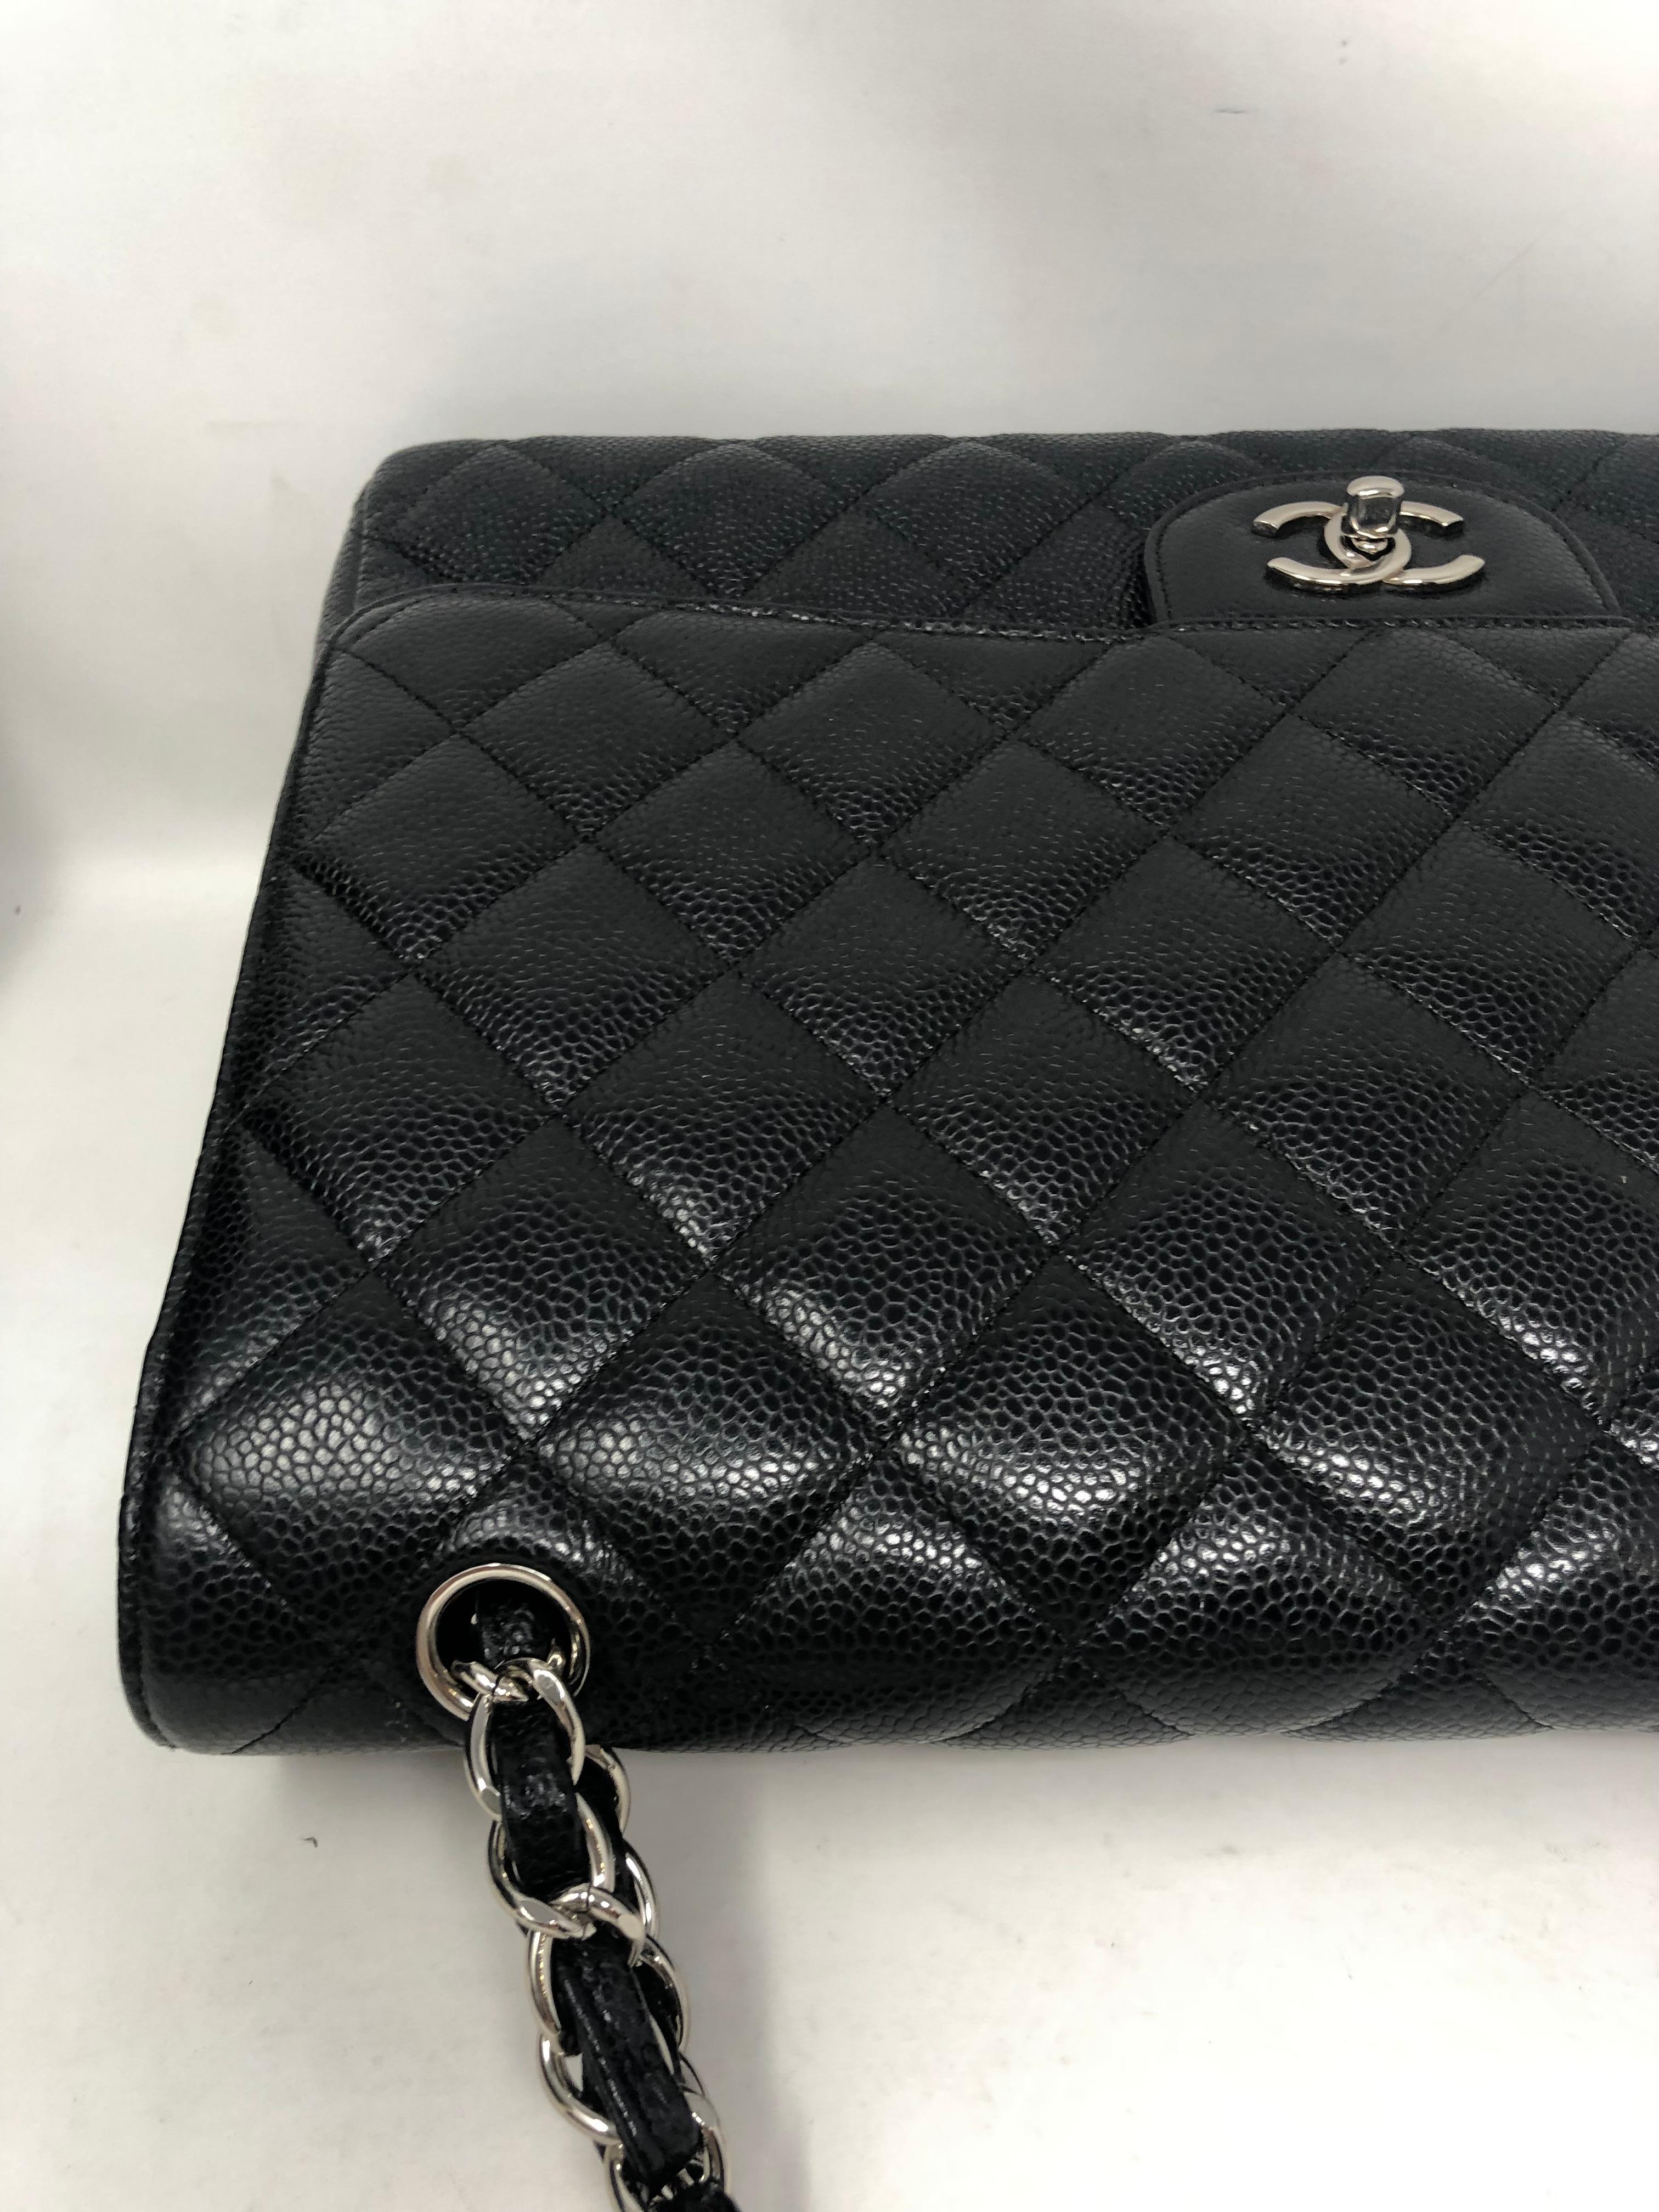 Chanel Black Caviar Leather Maxi Bag 2